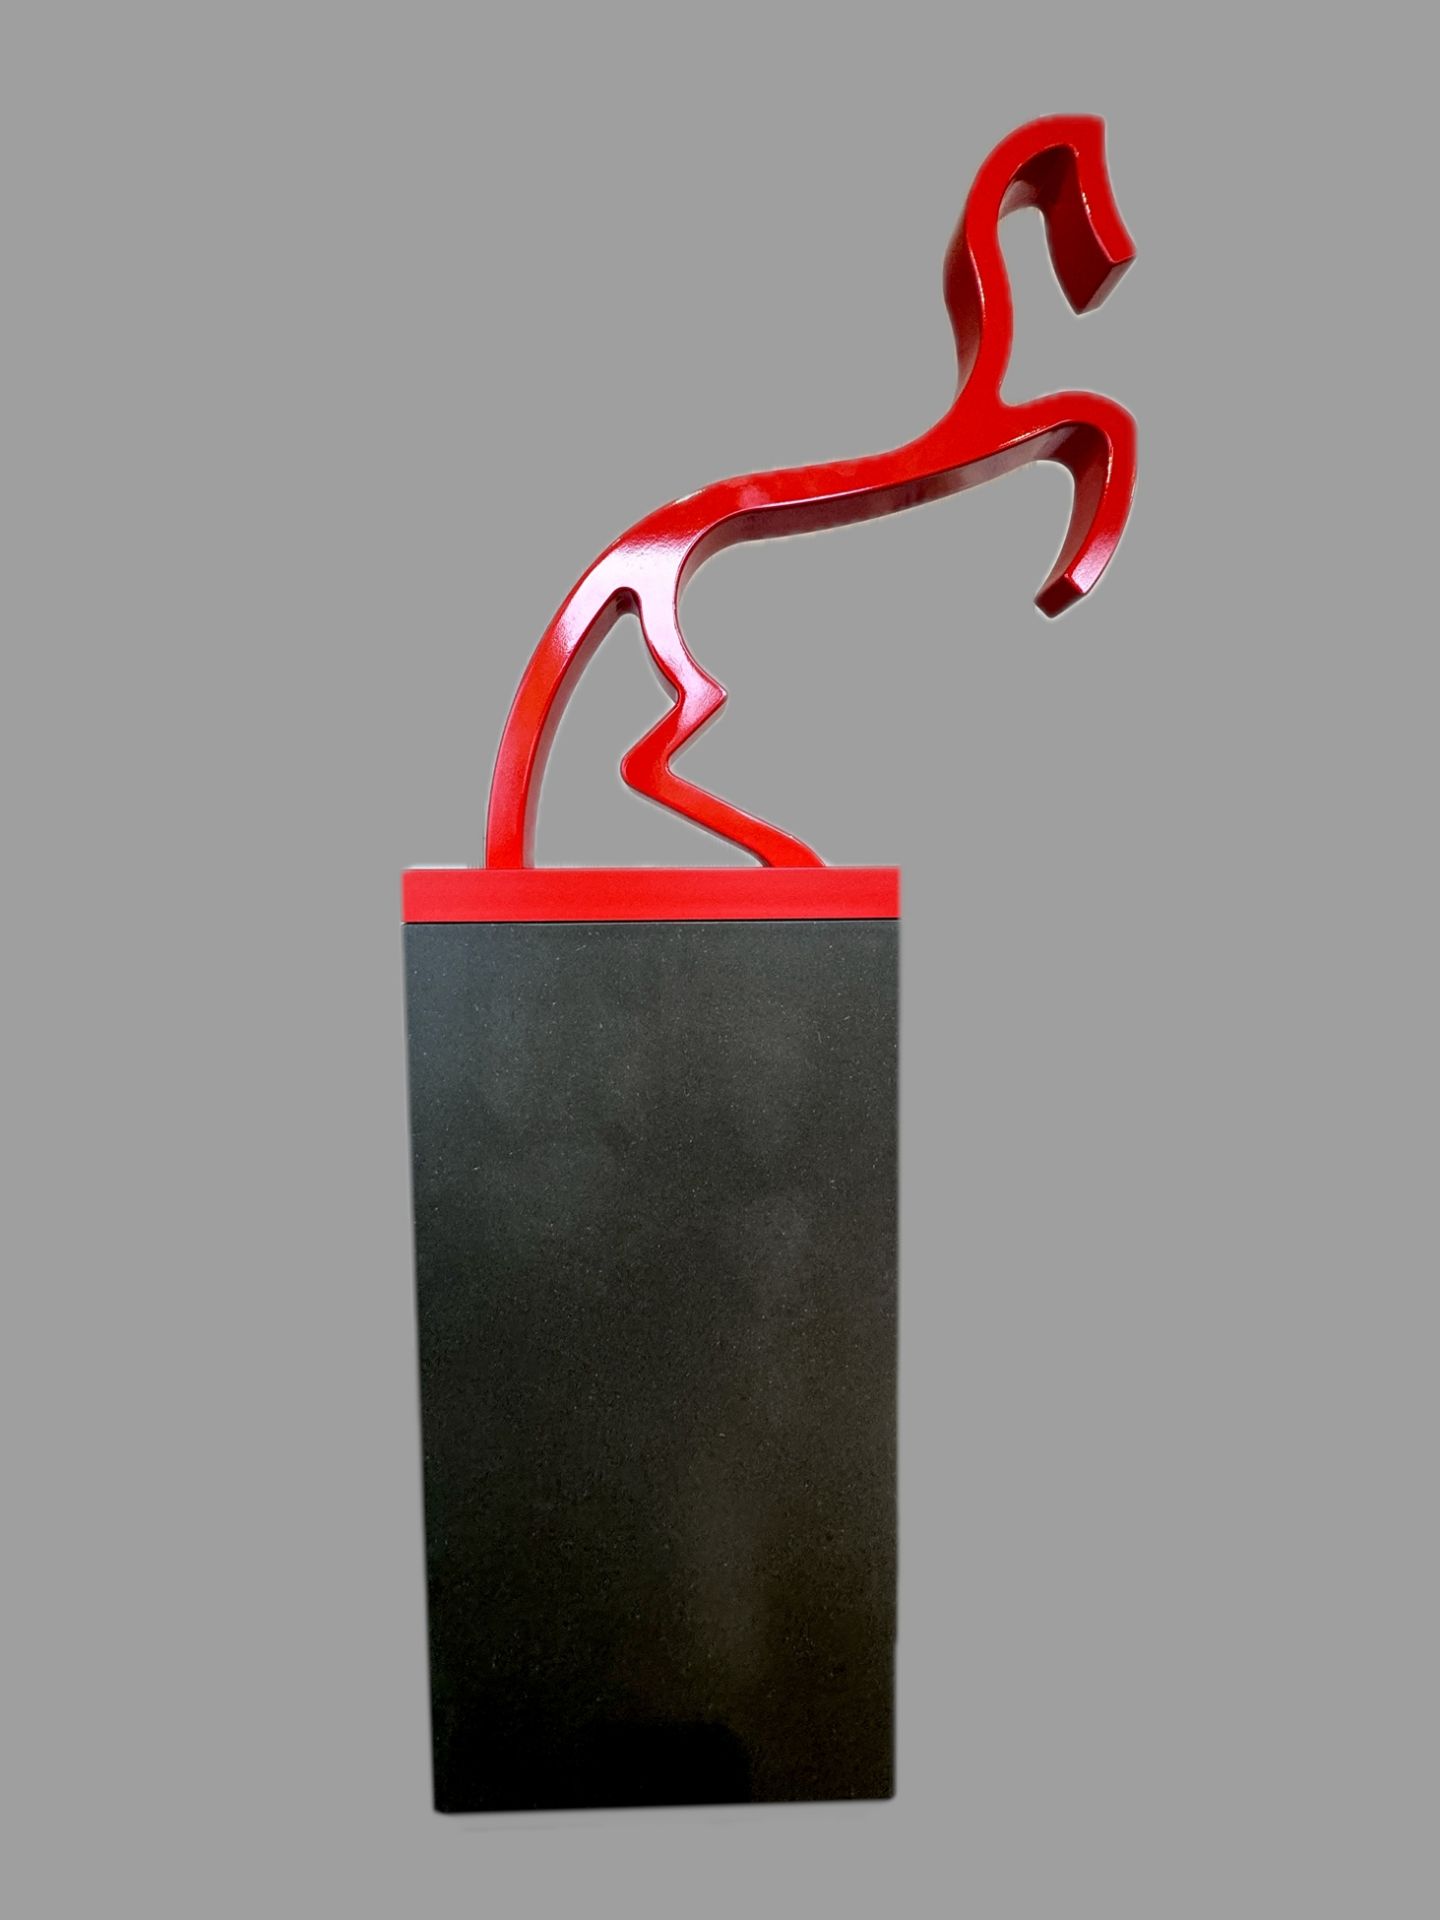 Hinger, Johann (1947 Linz) "Rotes Pferd", auf schwarzem Sockel, Reproduktion der Stahlskulptur in B